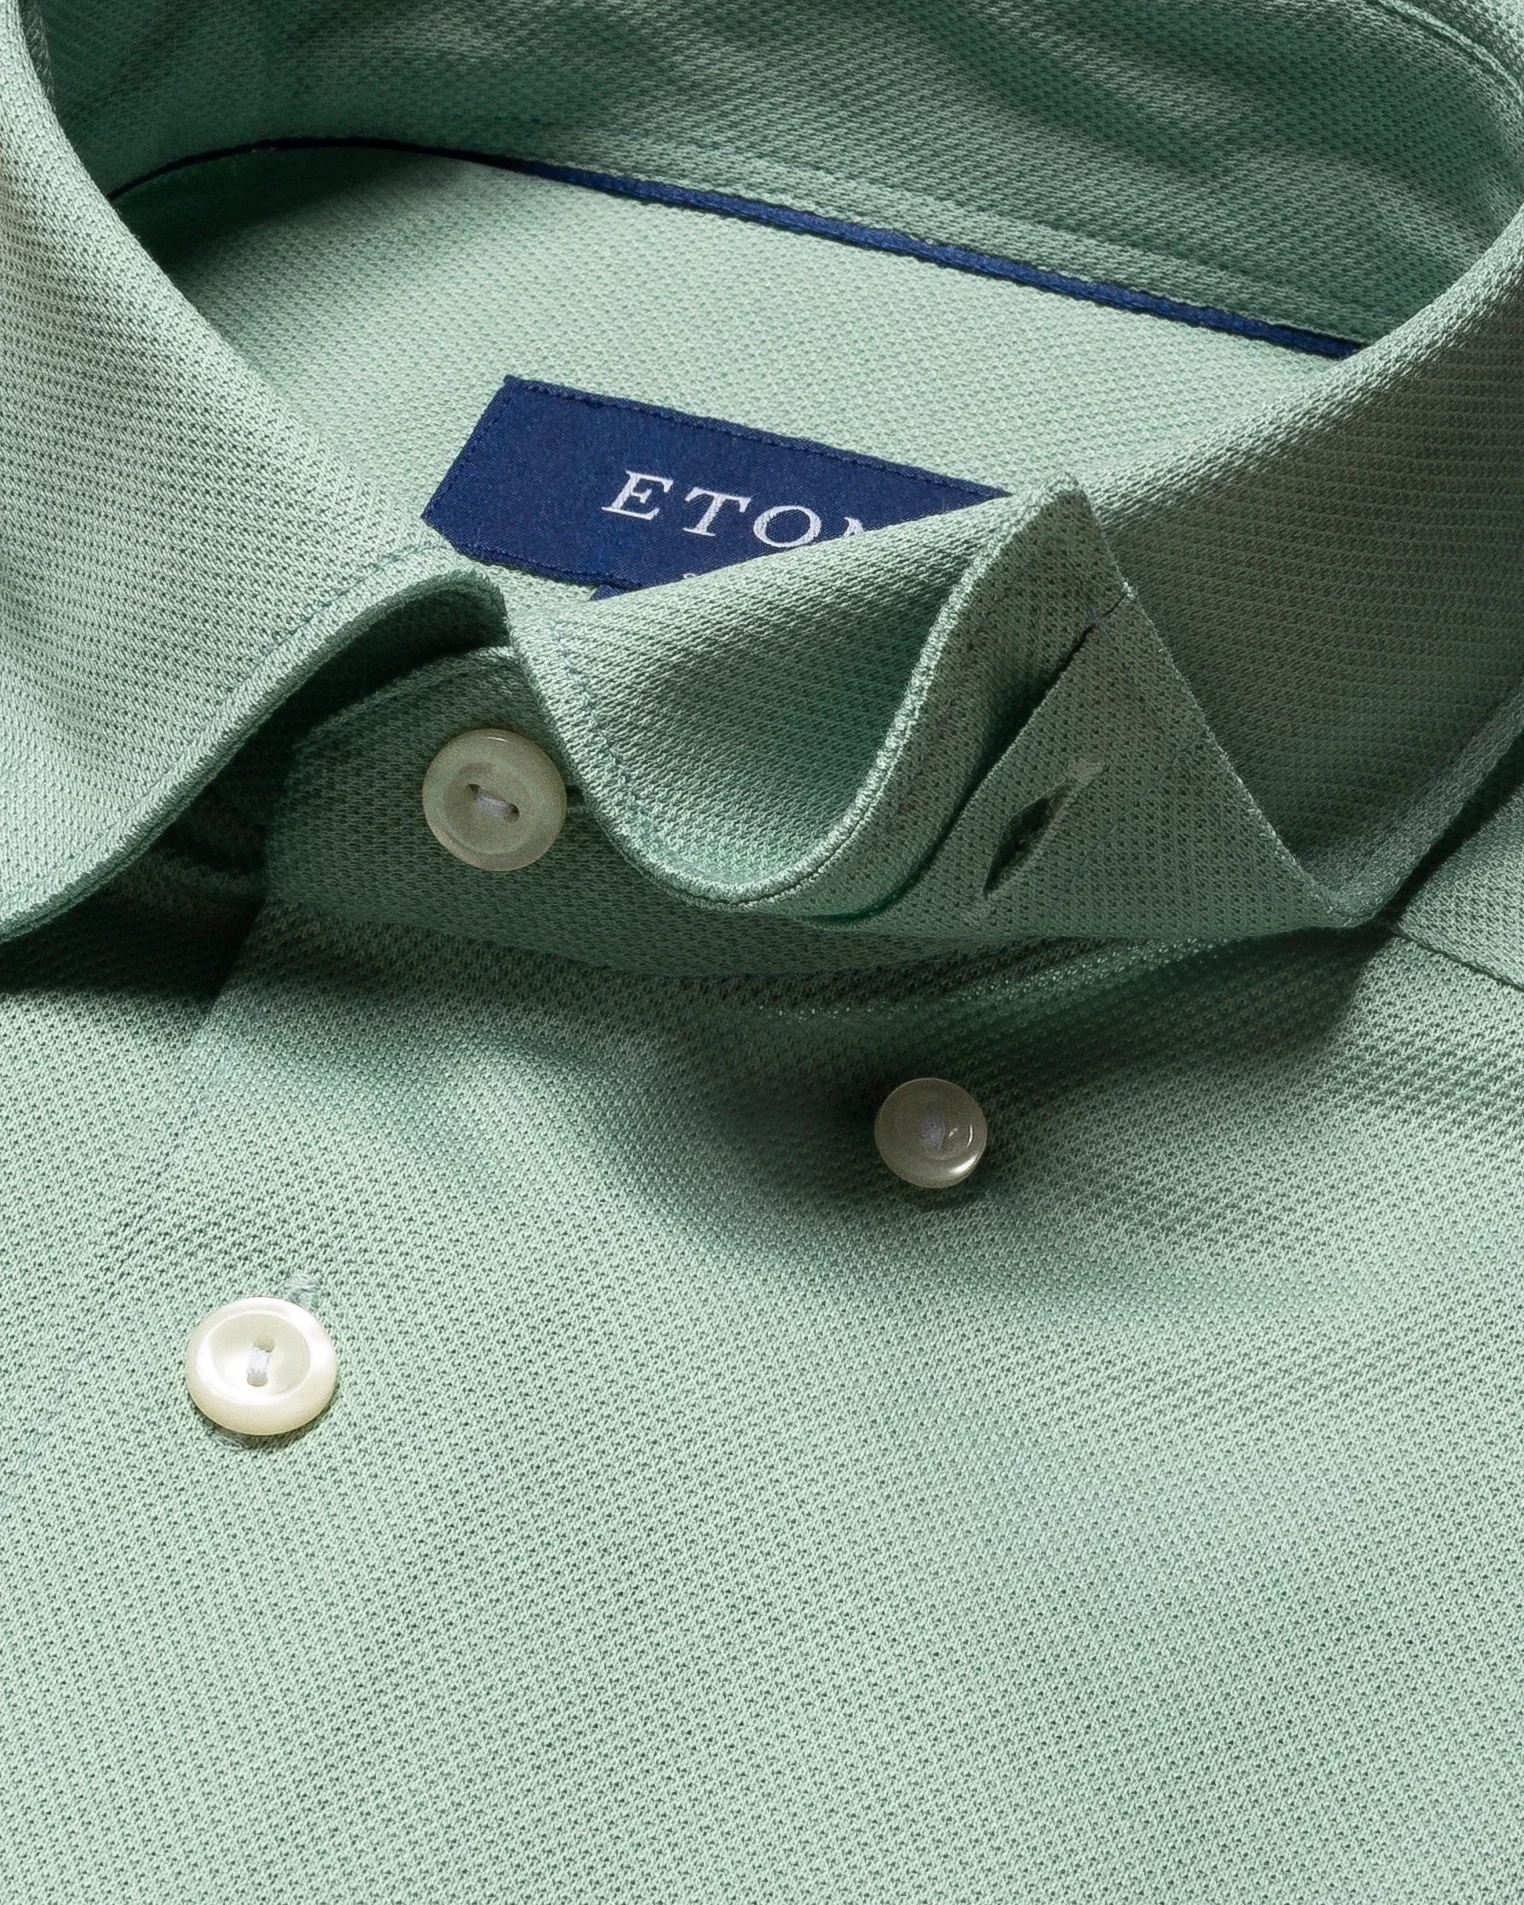 Eton - green polo shirt